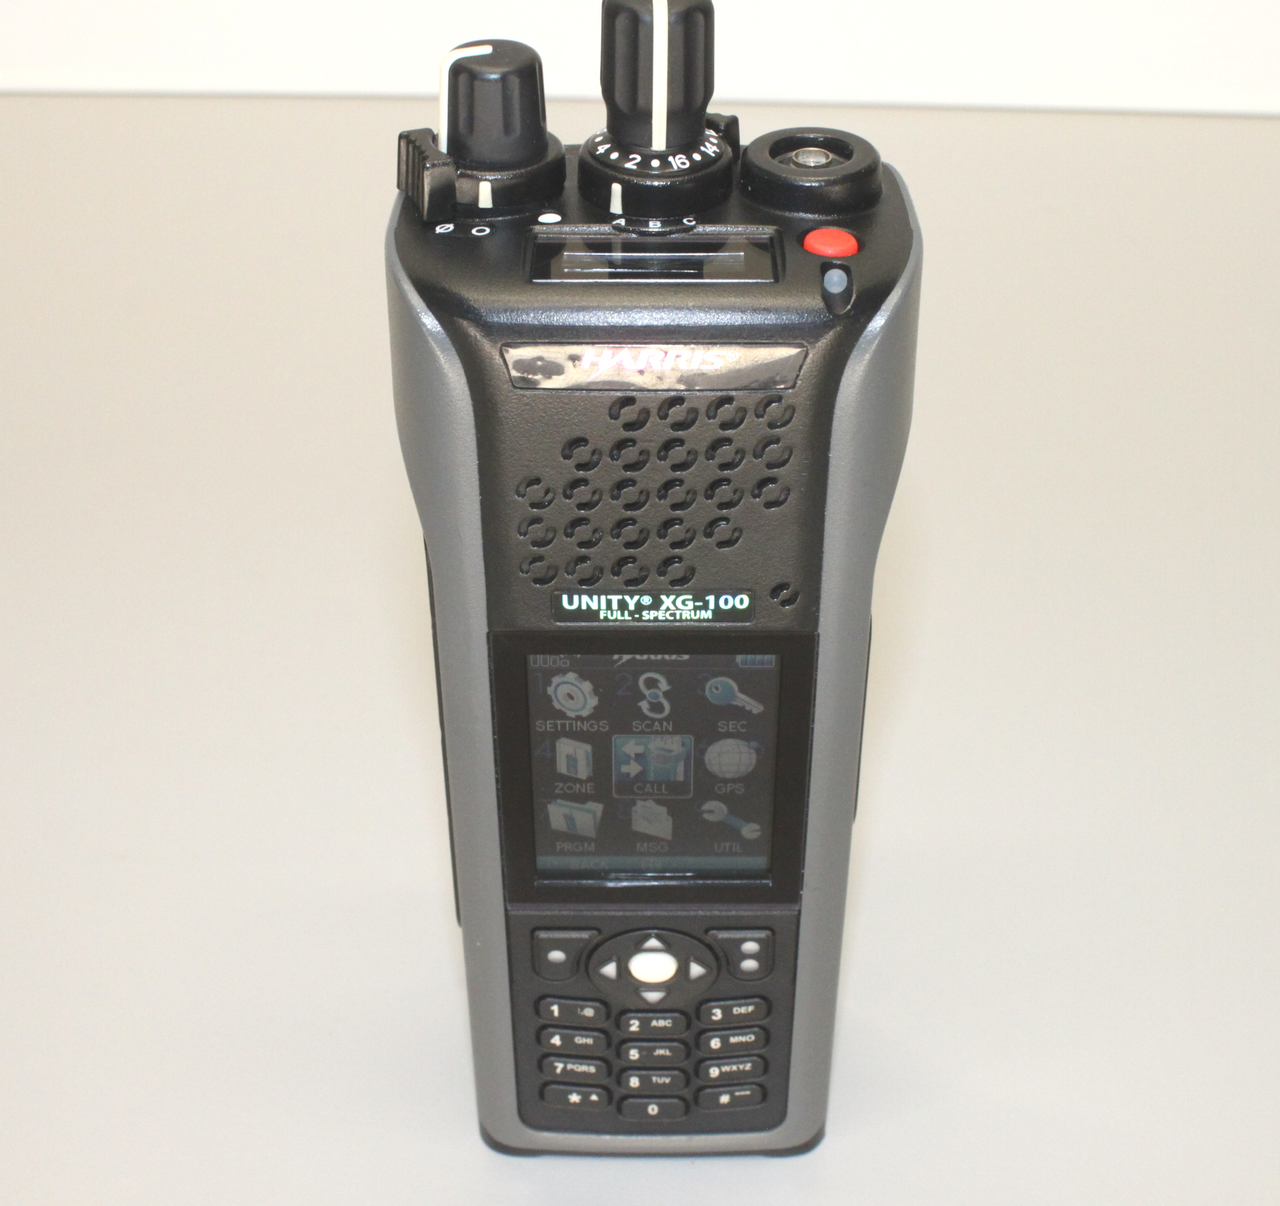 XG-25P Two Way Portable Radio